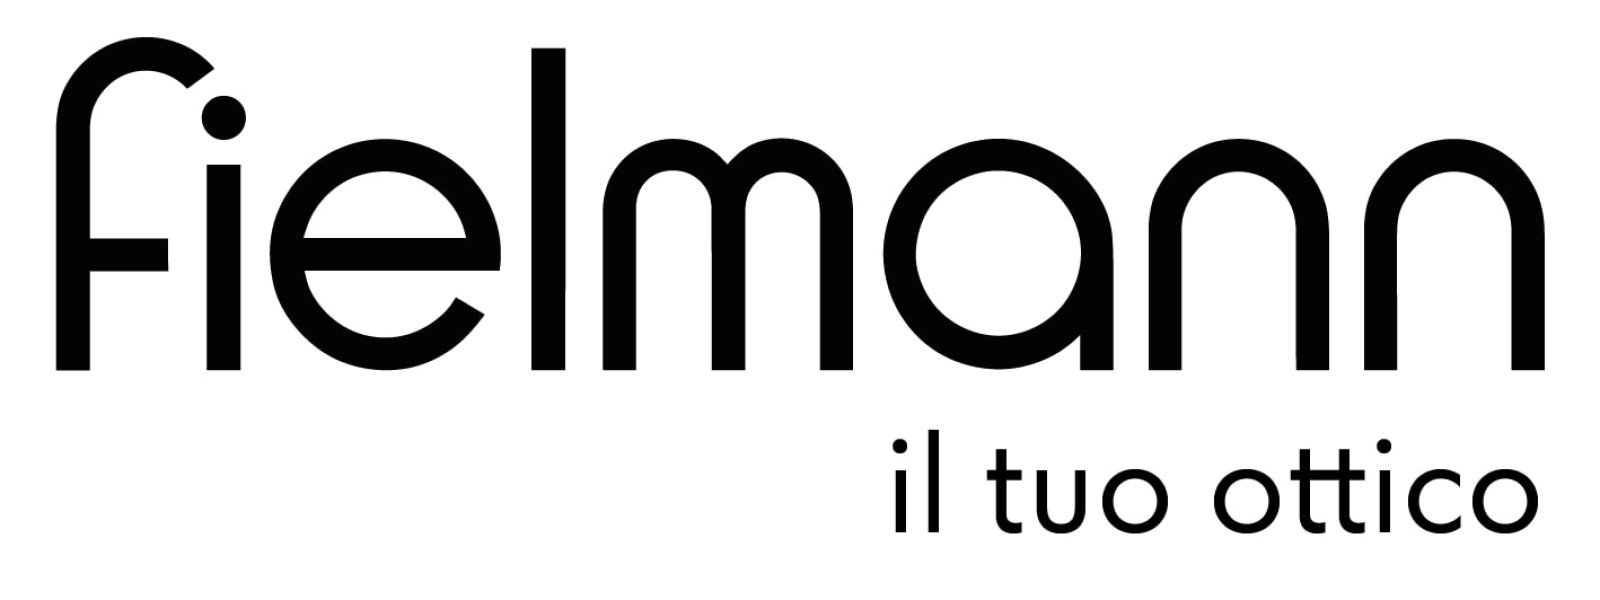 Logo Fielmann Italia Srl